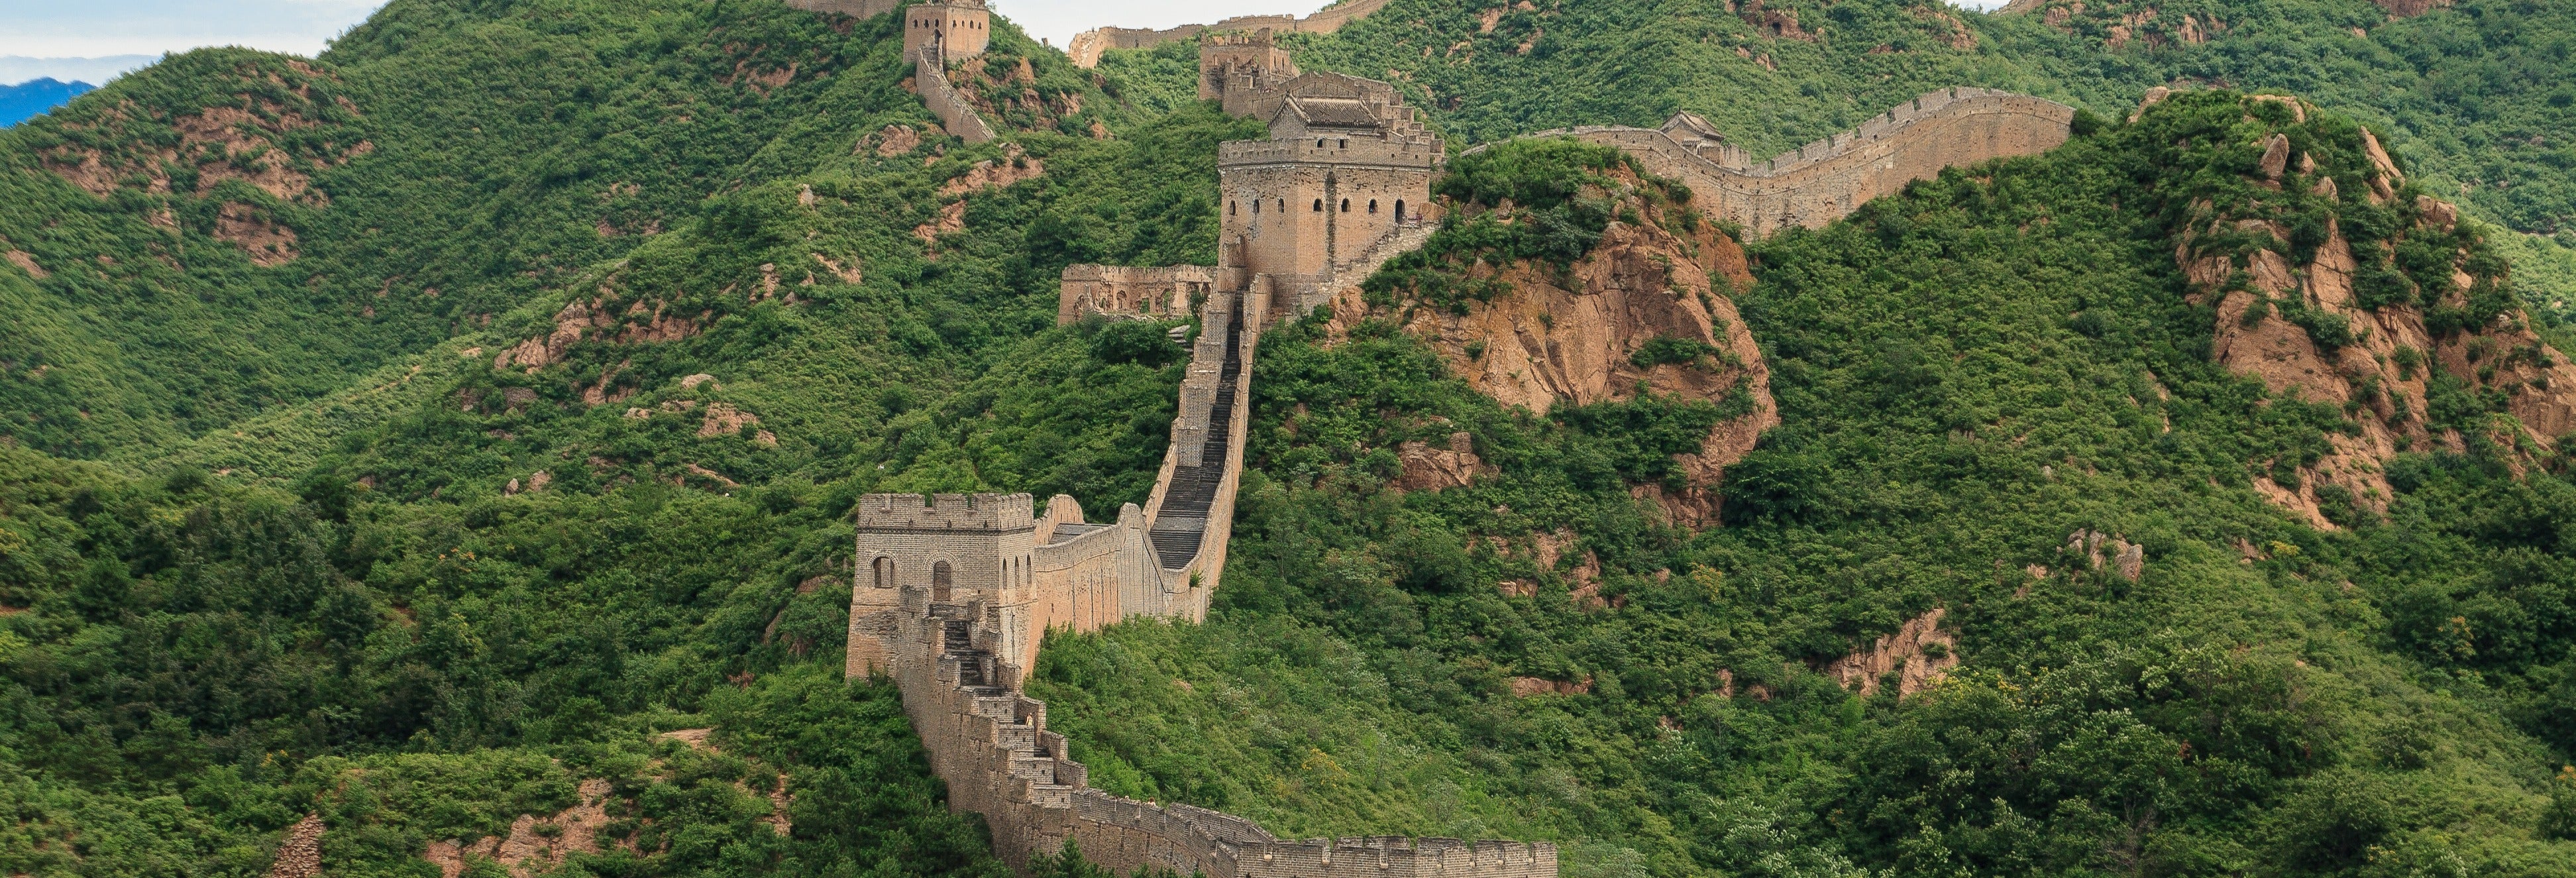 Excursão privada à Grande Muralha da China